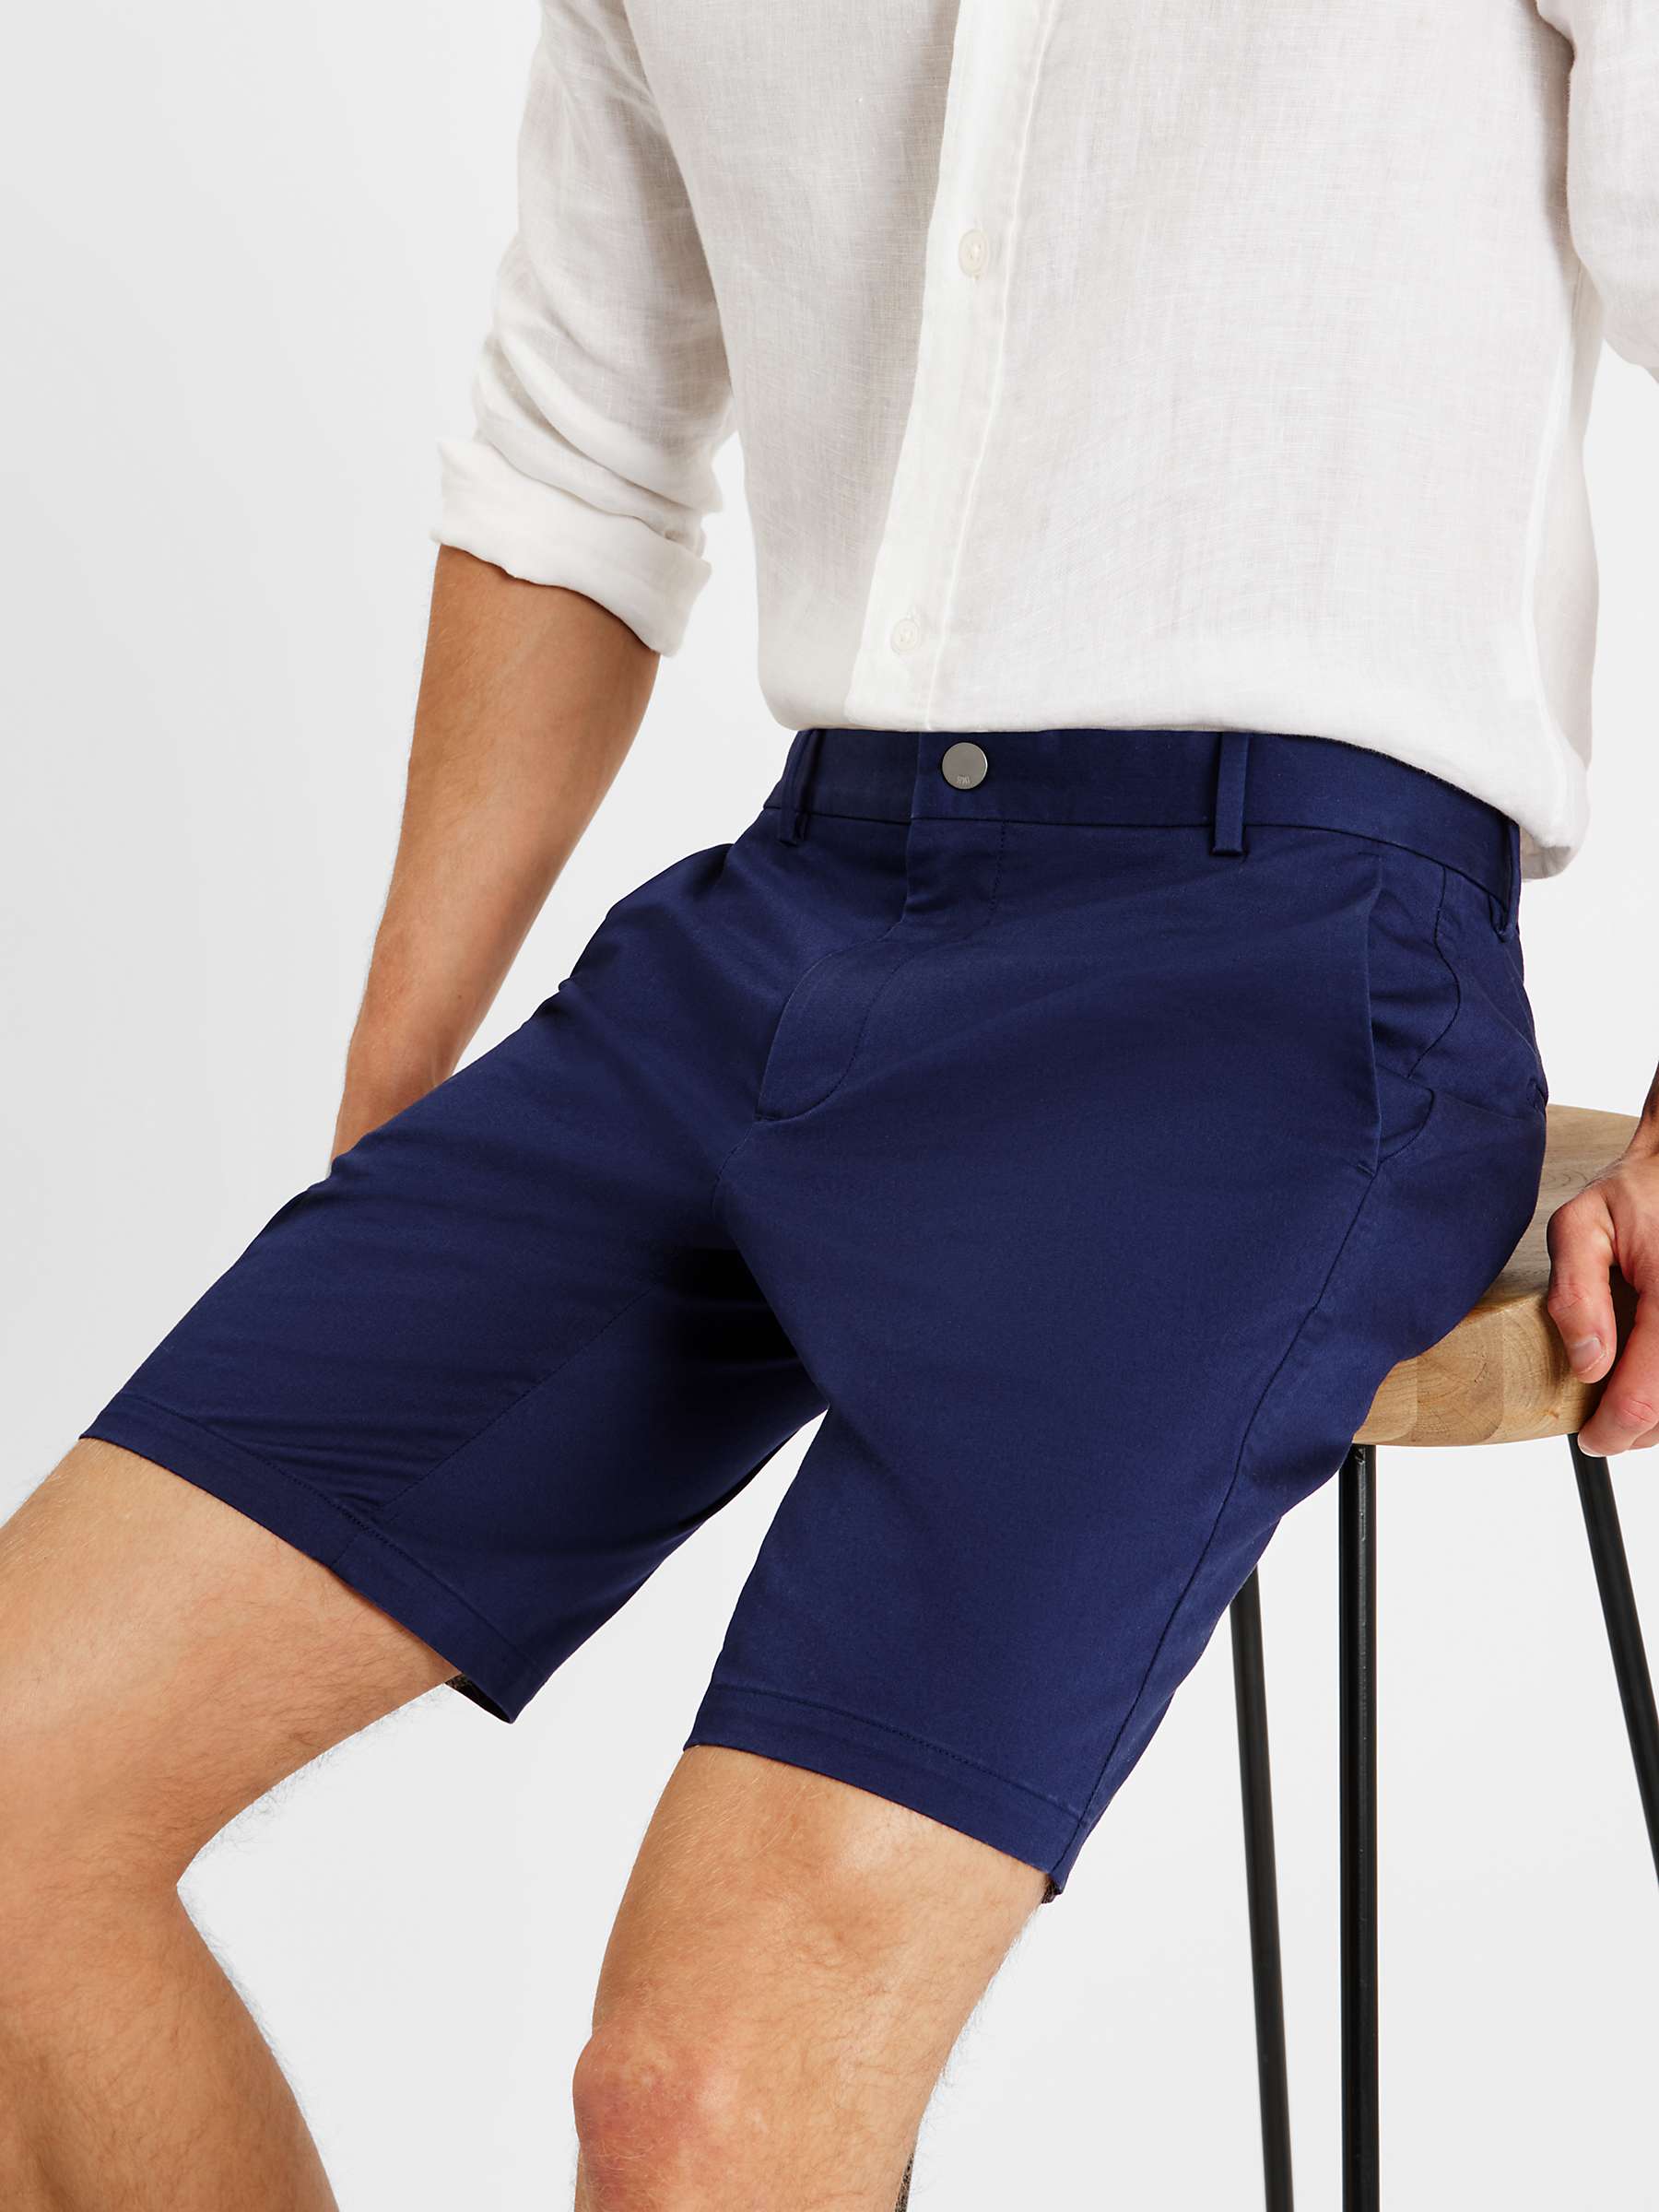 Buy SPOKE Sharps Cotton Blend Broad Thigh Shorts Online at johnlewis.com